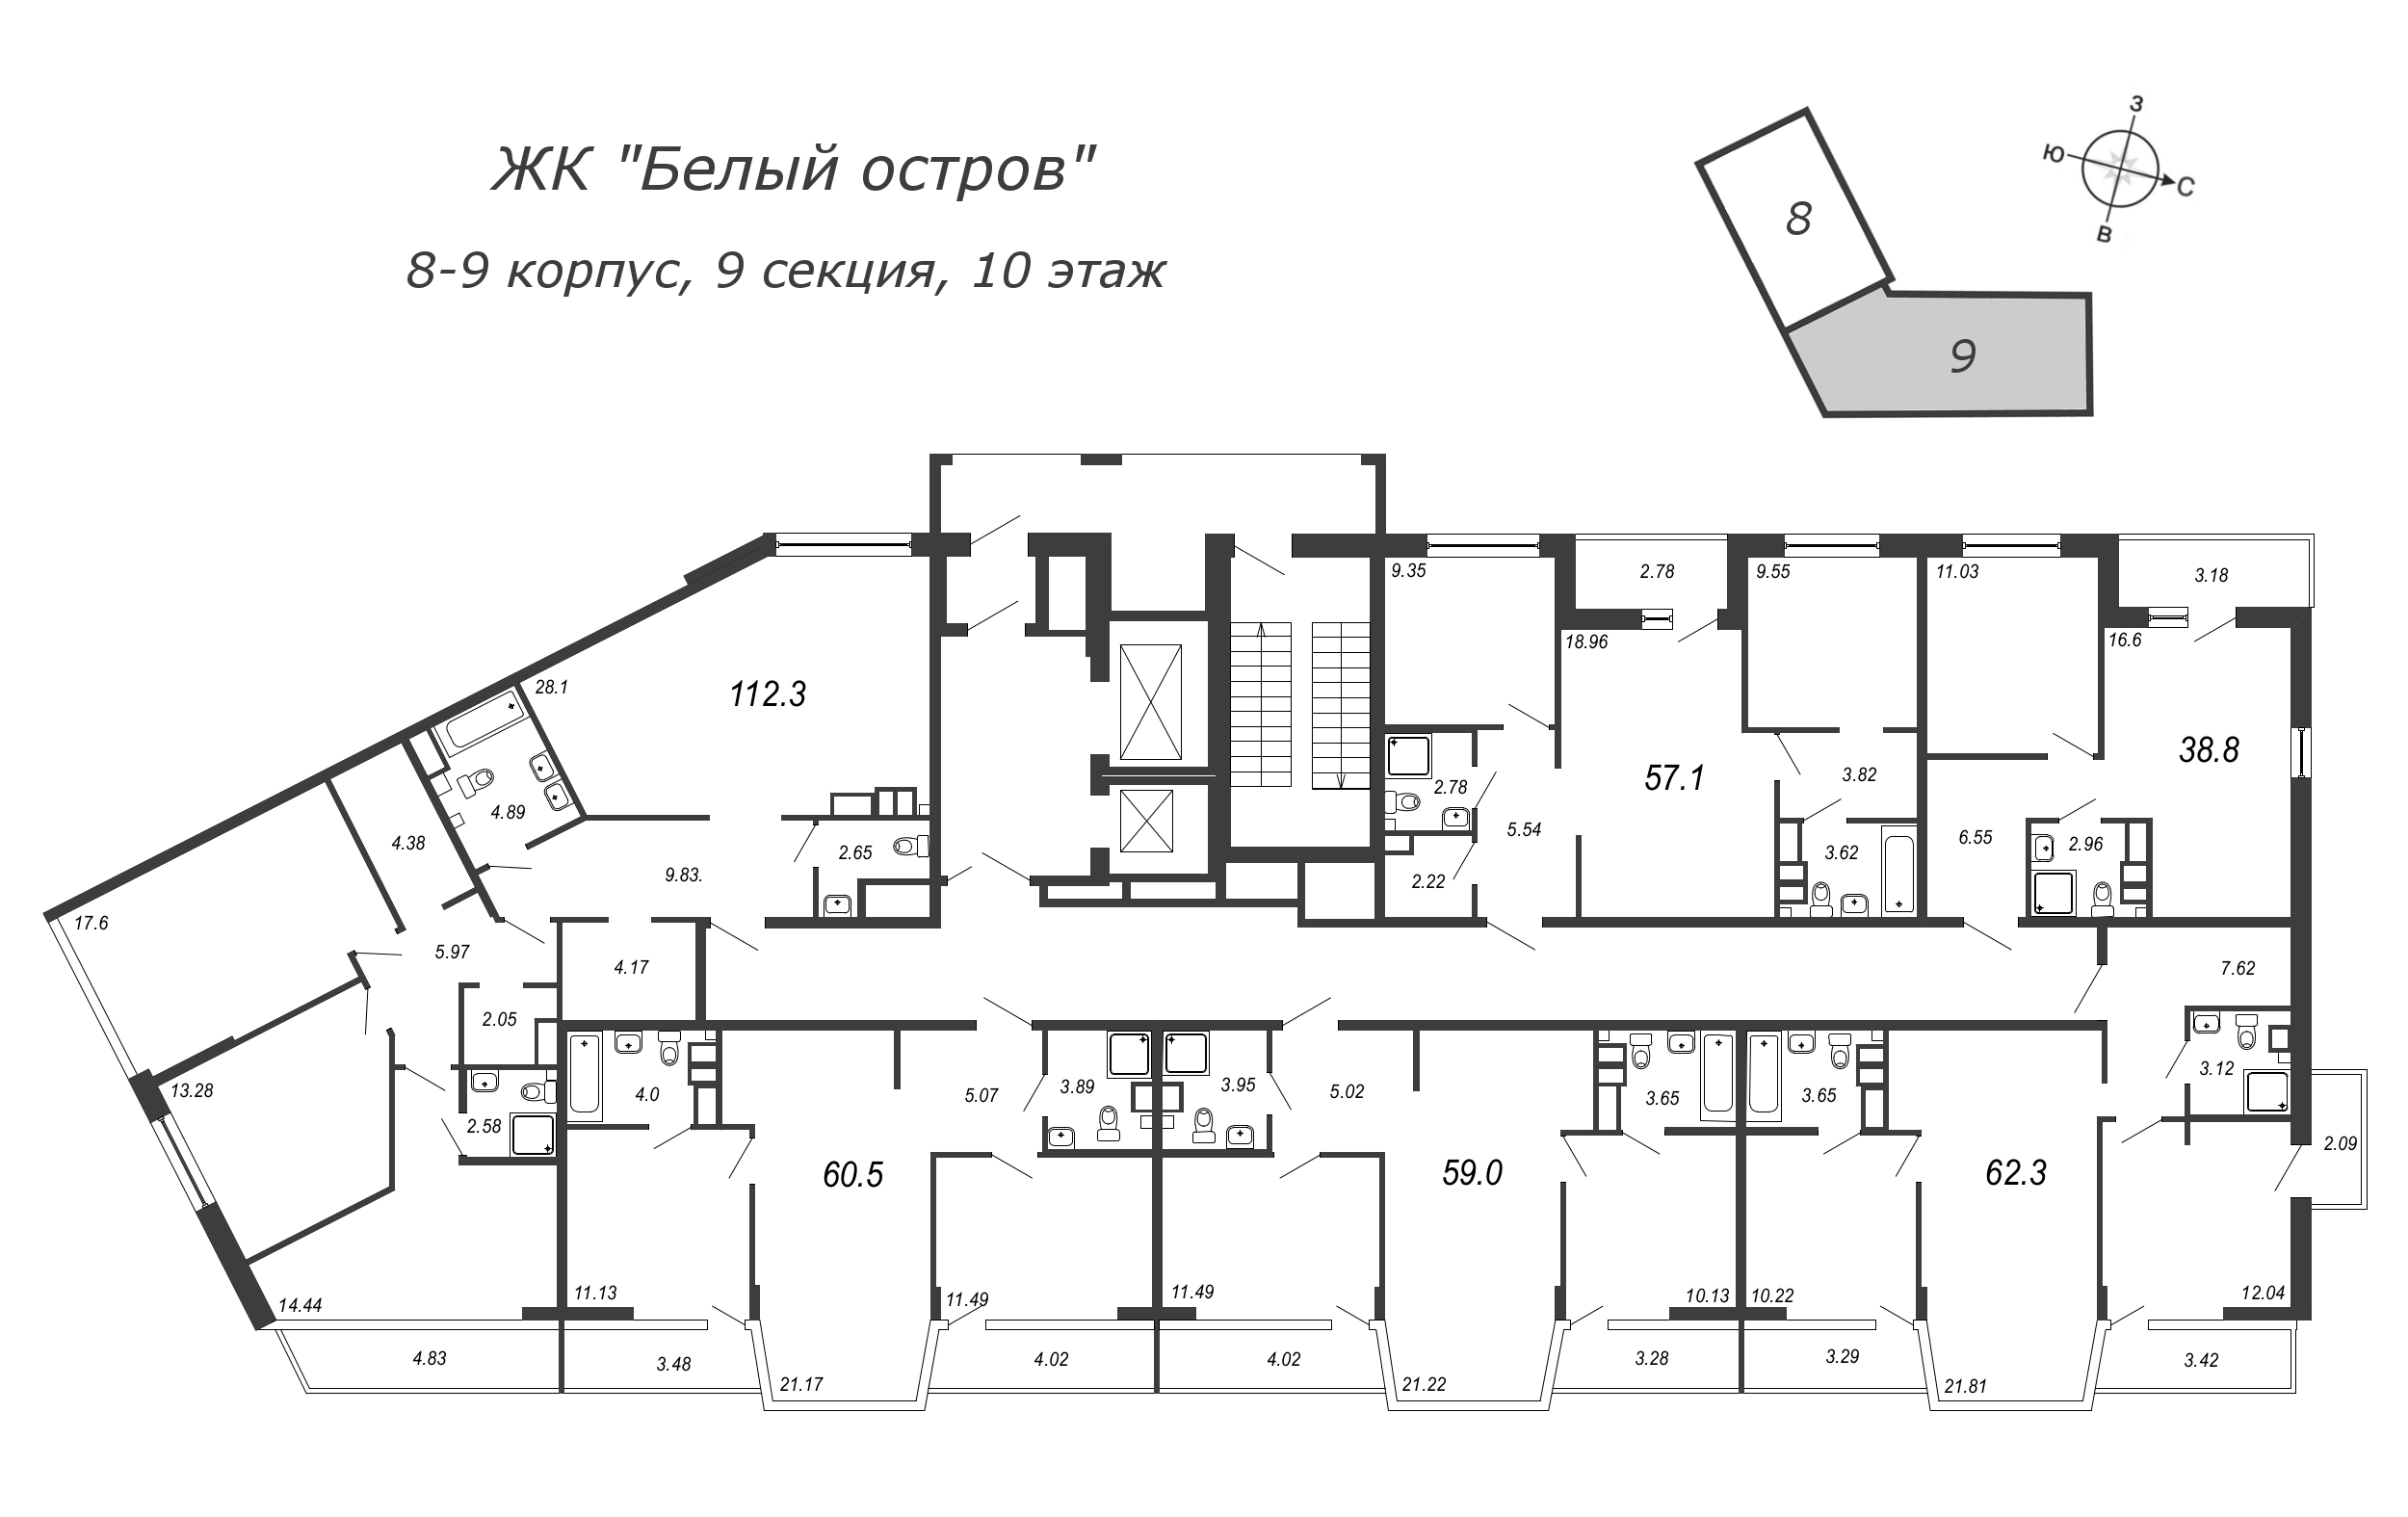 3-комнатная (Евро) квартира, 59.3 м² - планировка этажа